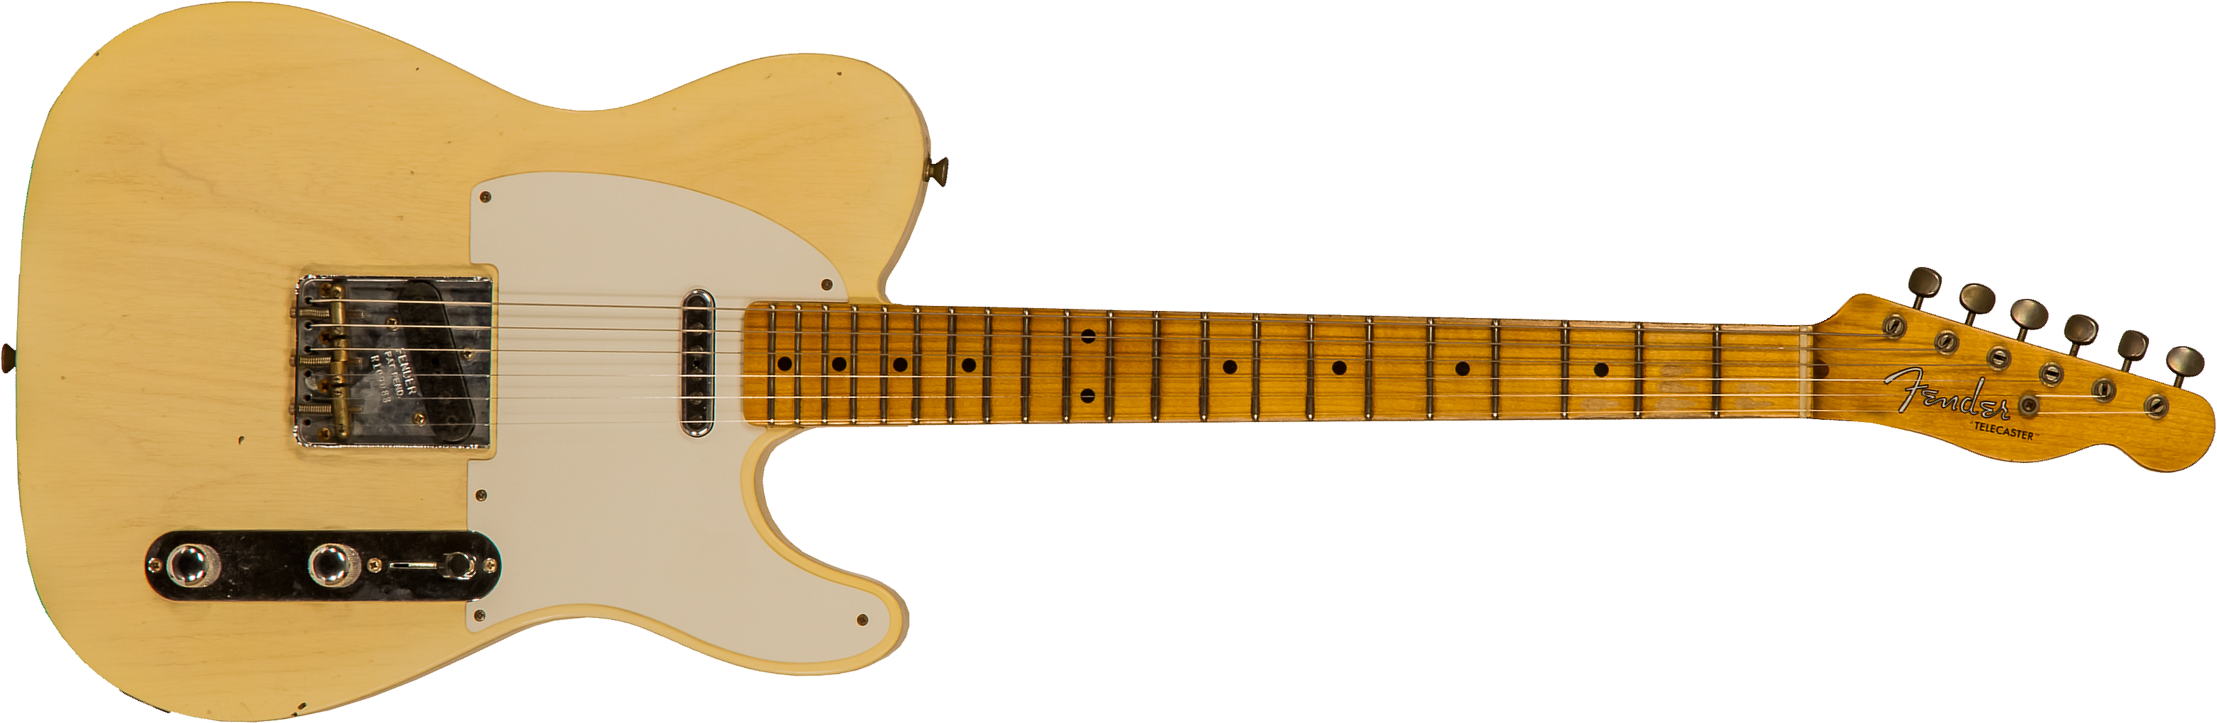 Fender Custom Shop Tele Tomatillo Ltd 2s Ht Mn #r109088 - Journeyman Relic Natural Blonde - Televorm elektrische gitaar - Main picture